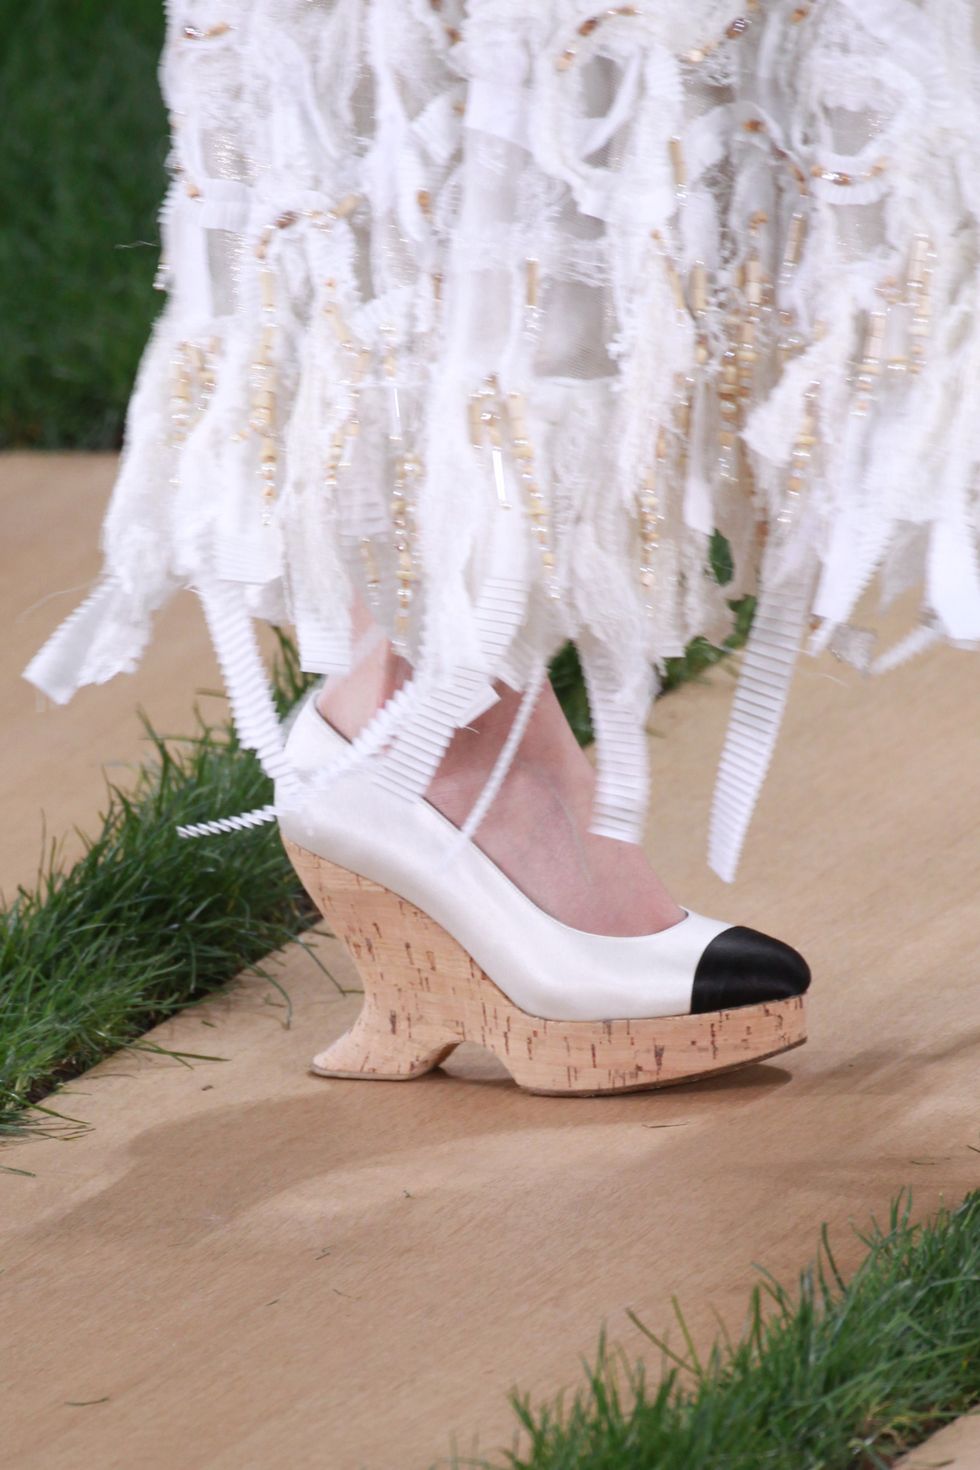 Foot, Beige, High heels, Sandal, Sand, Peach, Bridal shoe, Ankle, Natural material, 